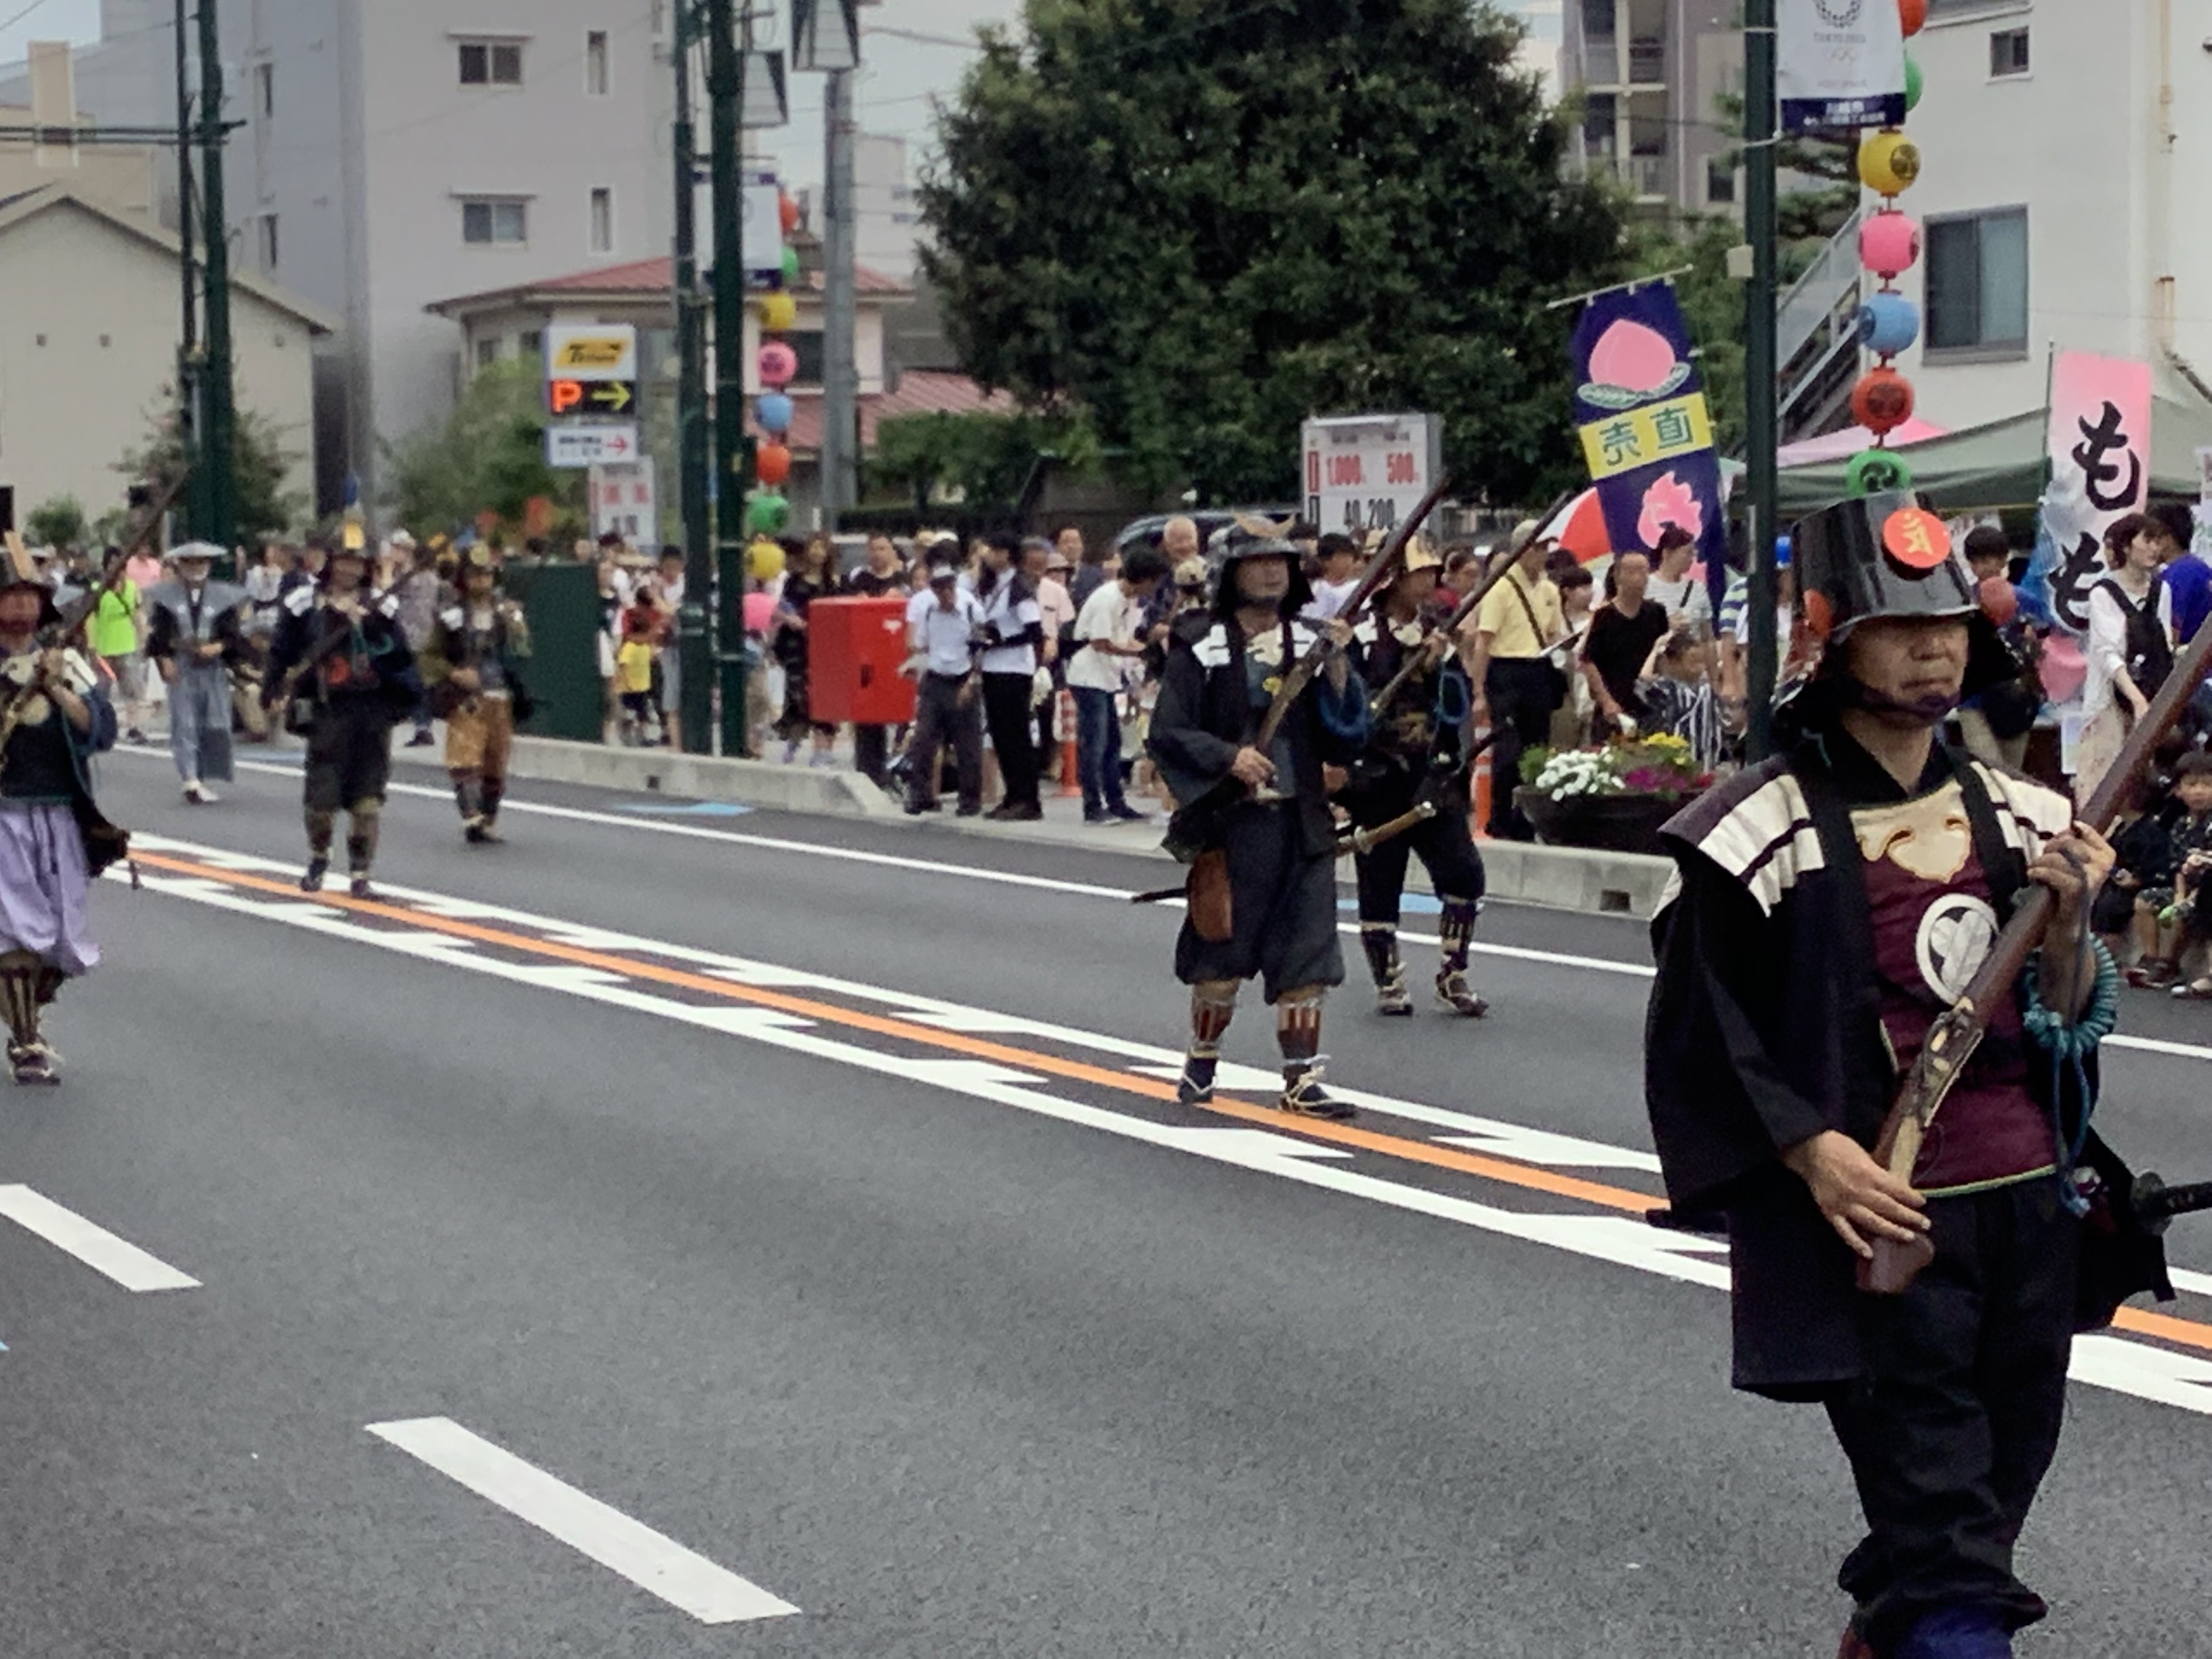 Samurais with Japanese rifles